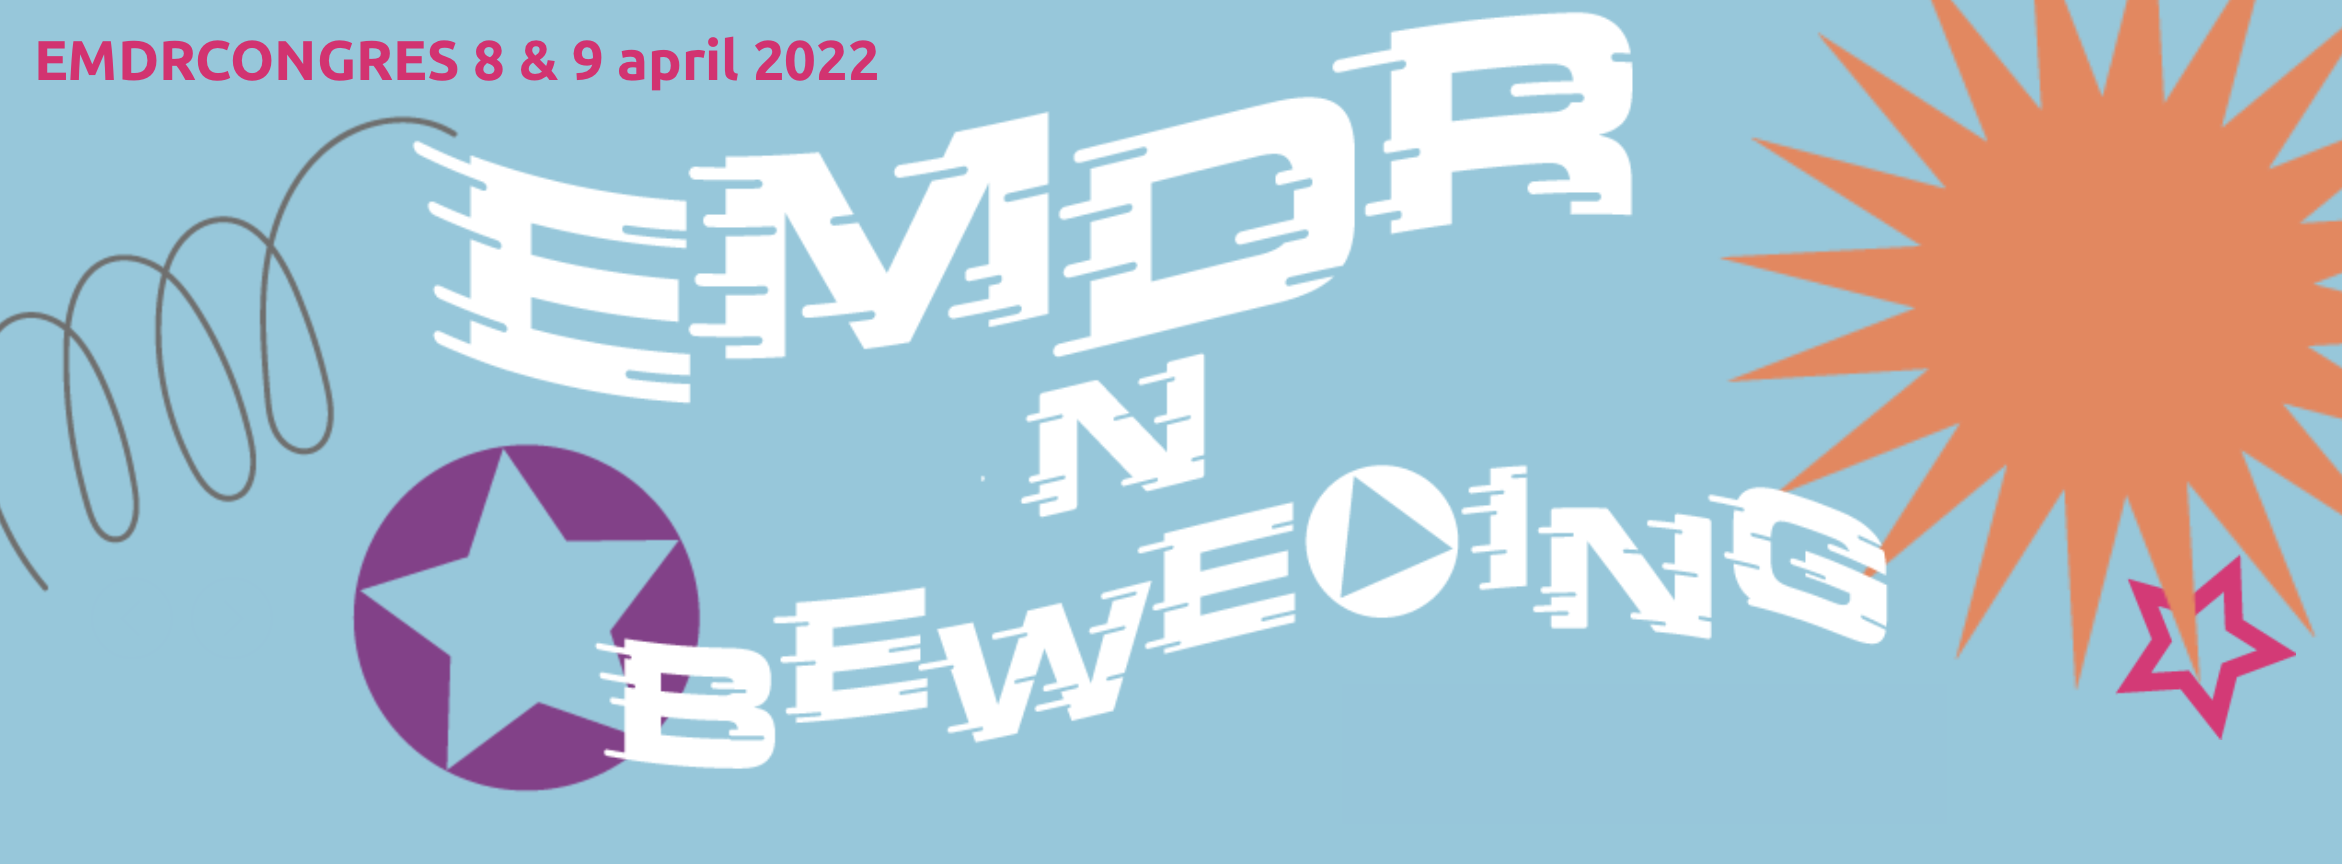 Header EMDR Congres 2022-2.png